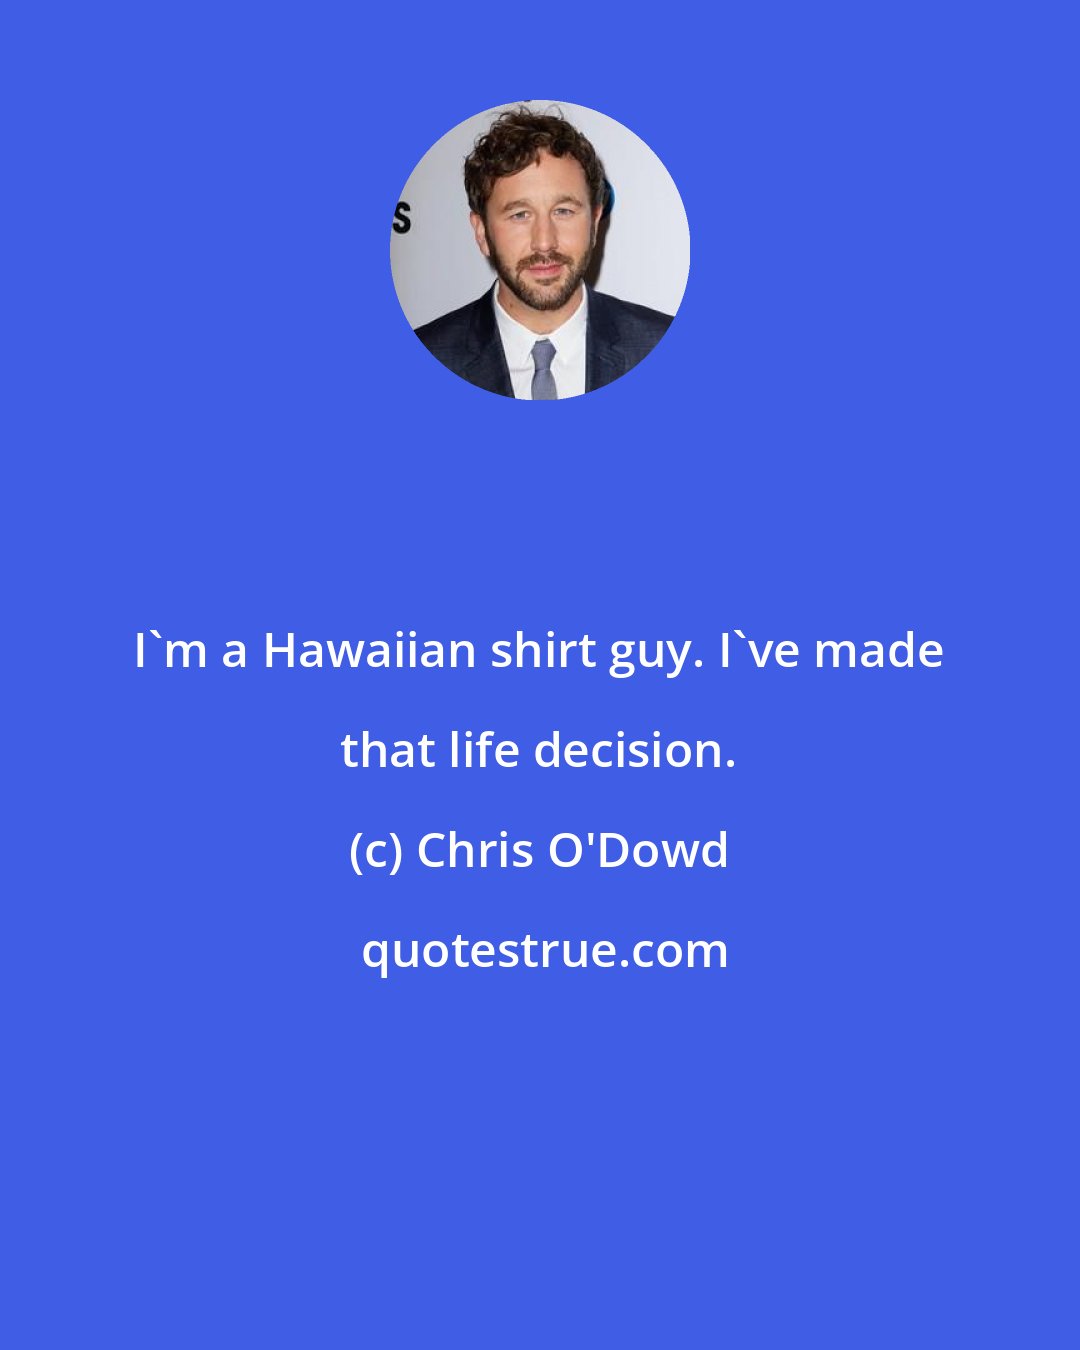 Chris O'Dowd: I'm a Hawaiian shirt guy. I've made that life decision.